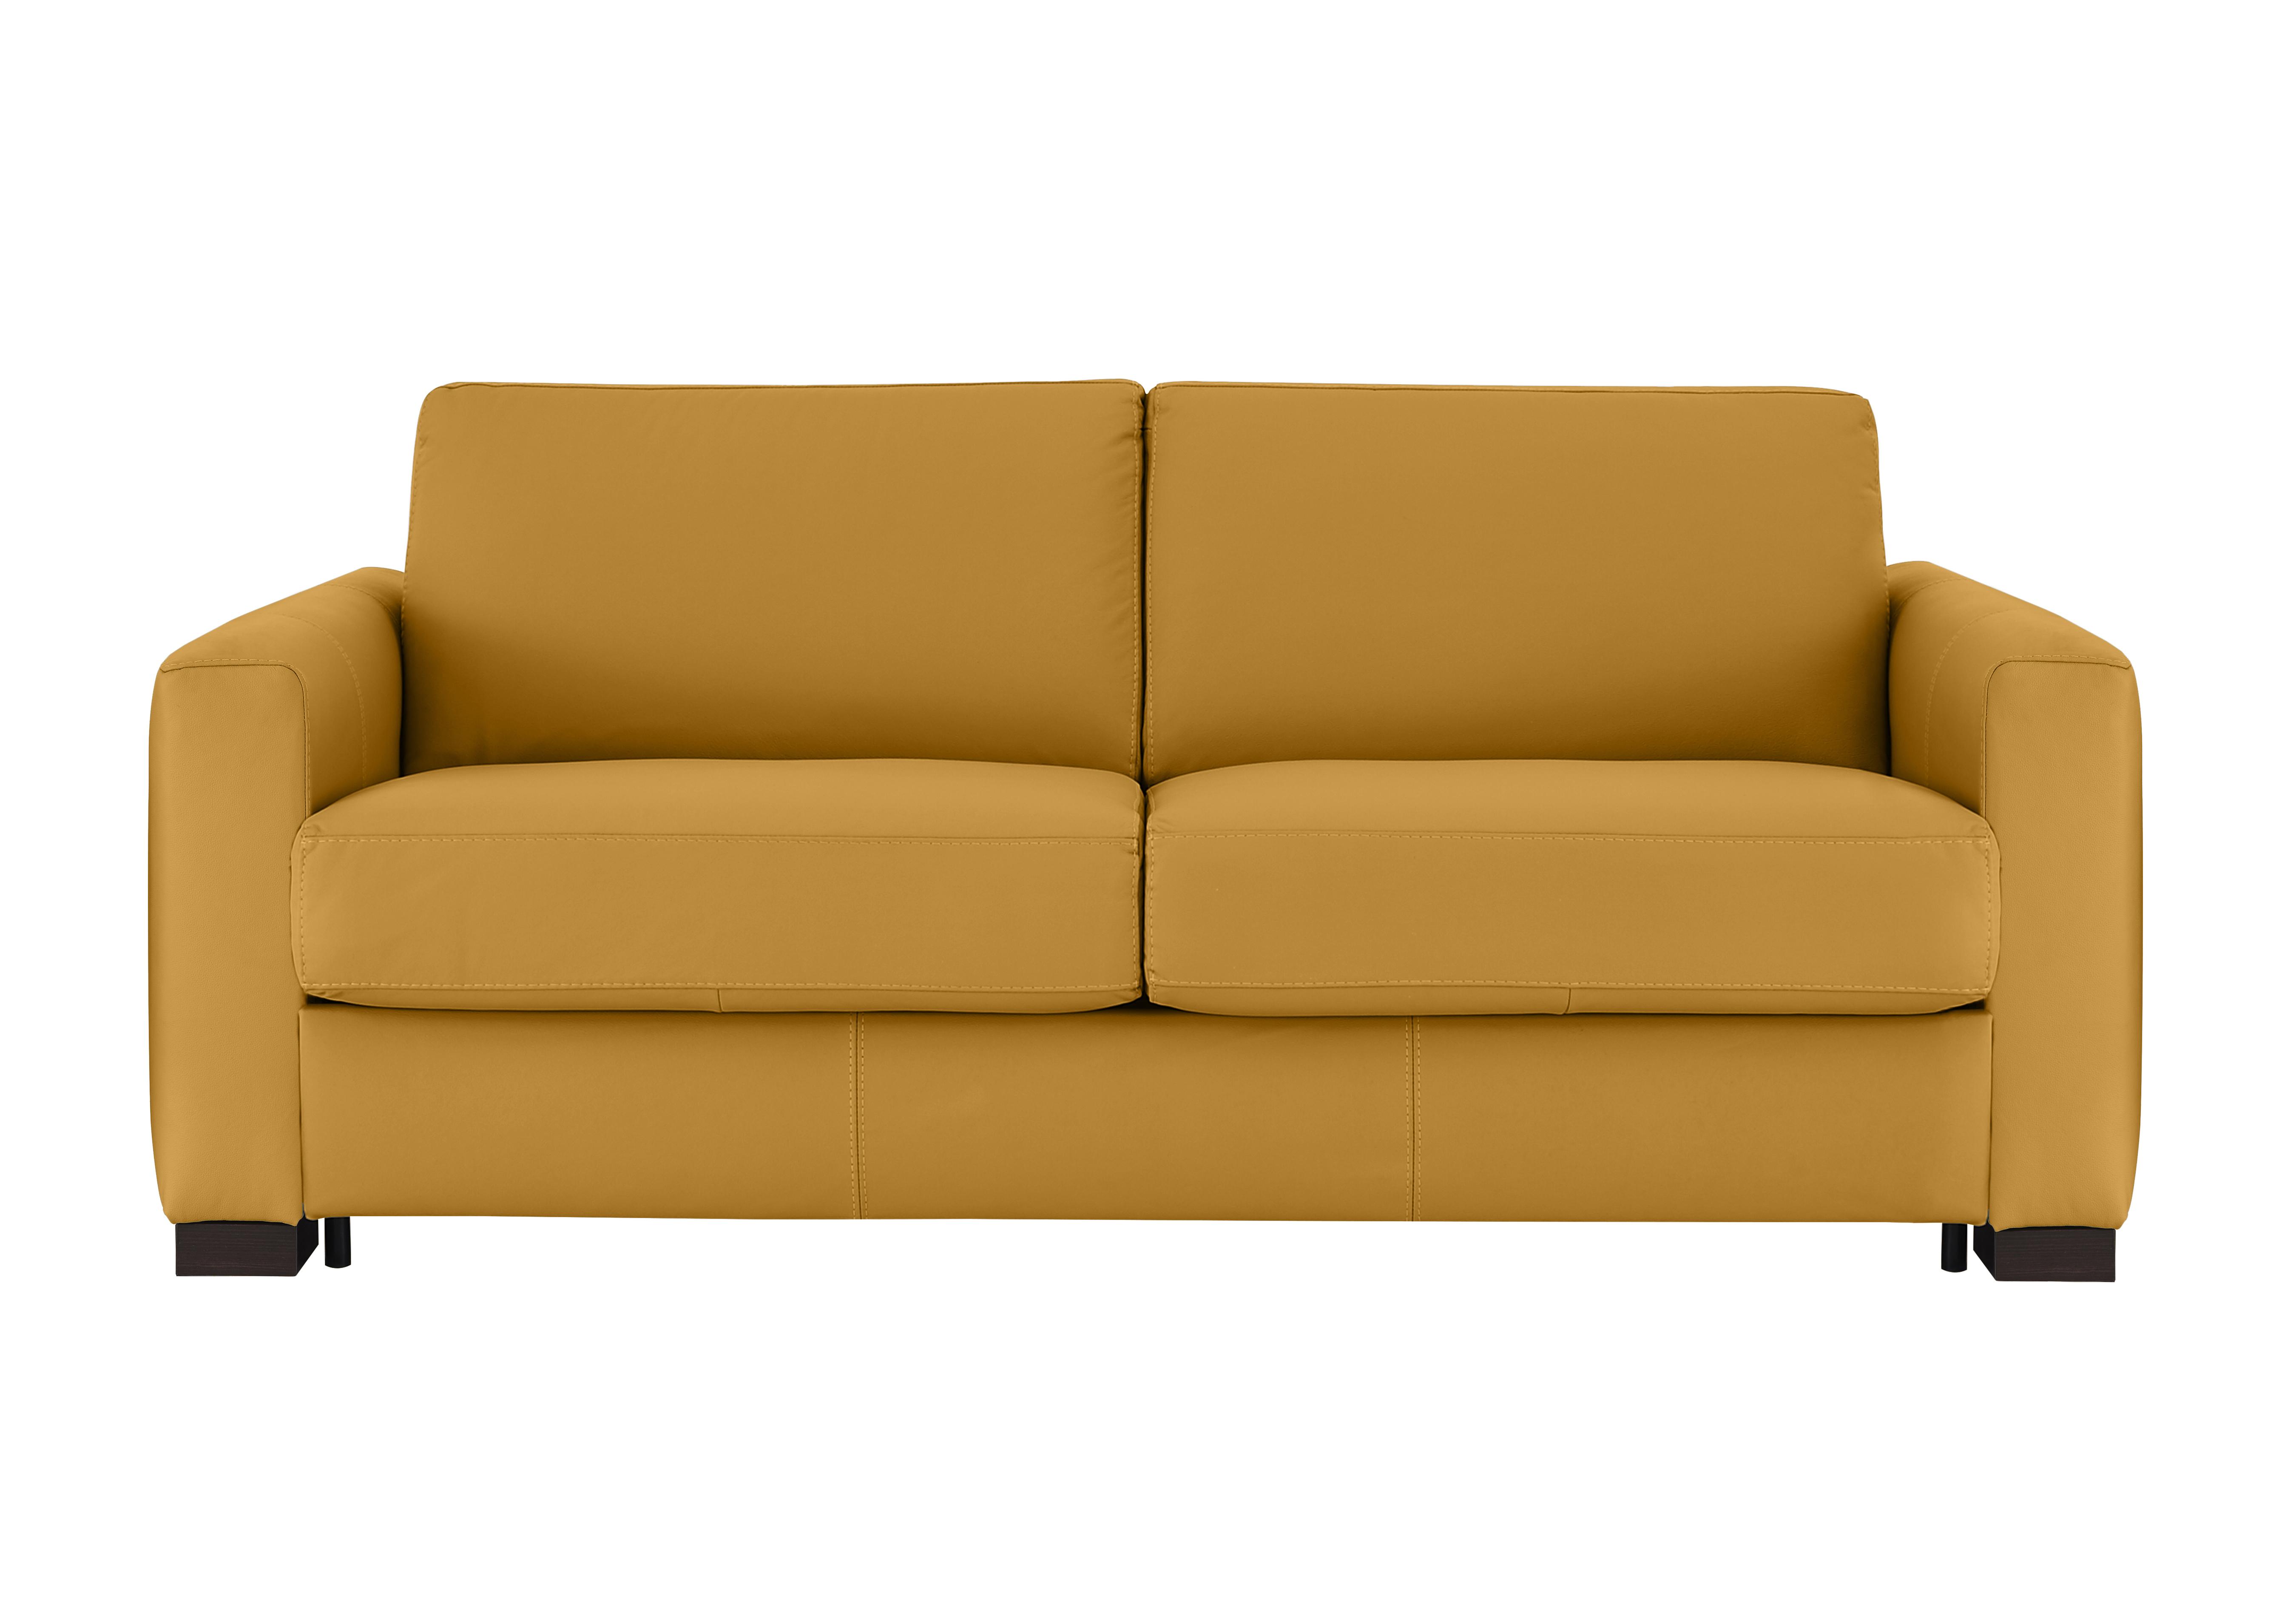 Alcova 3 Seater Leather Sofa Bed with Box Arms in Torello Senape 355 on Furniture Village